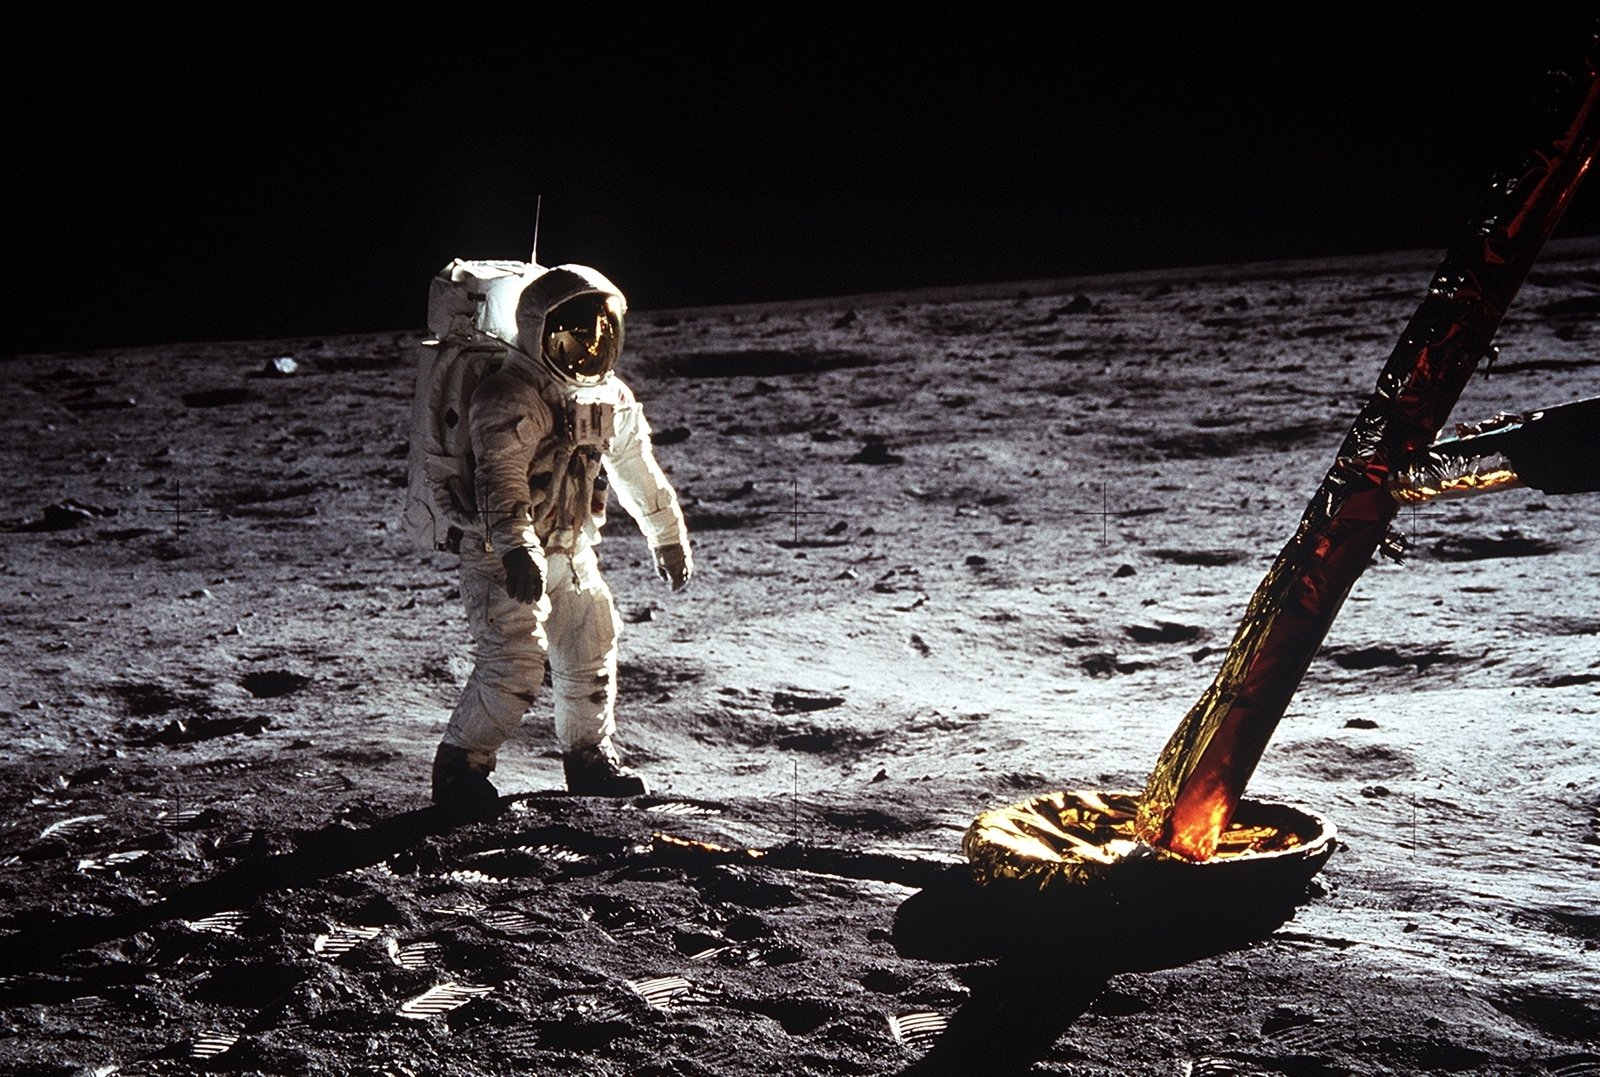 Astronaut 'Buzz' Aldrin walks on the surface of the Moon near a leg of the lunar module during Apollo 11